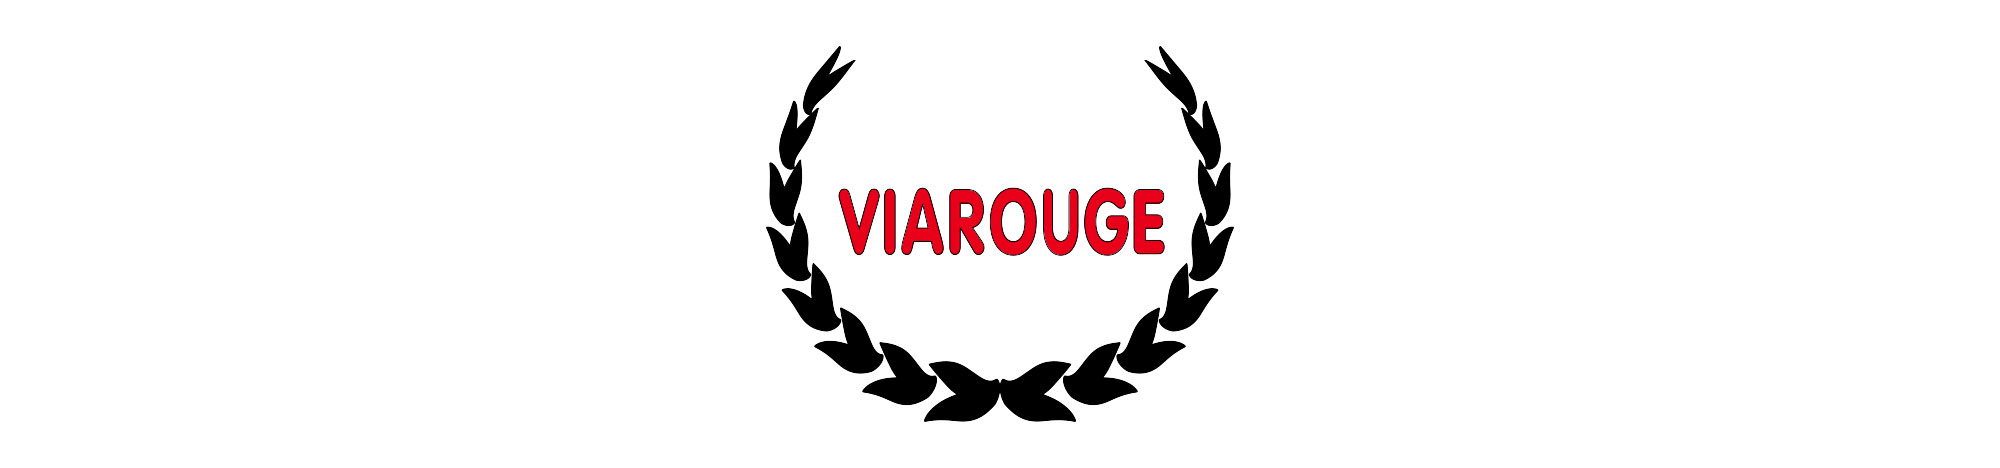 Viarouge